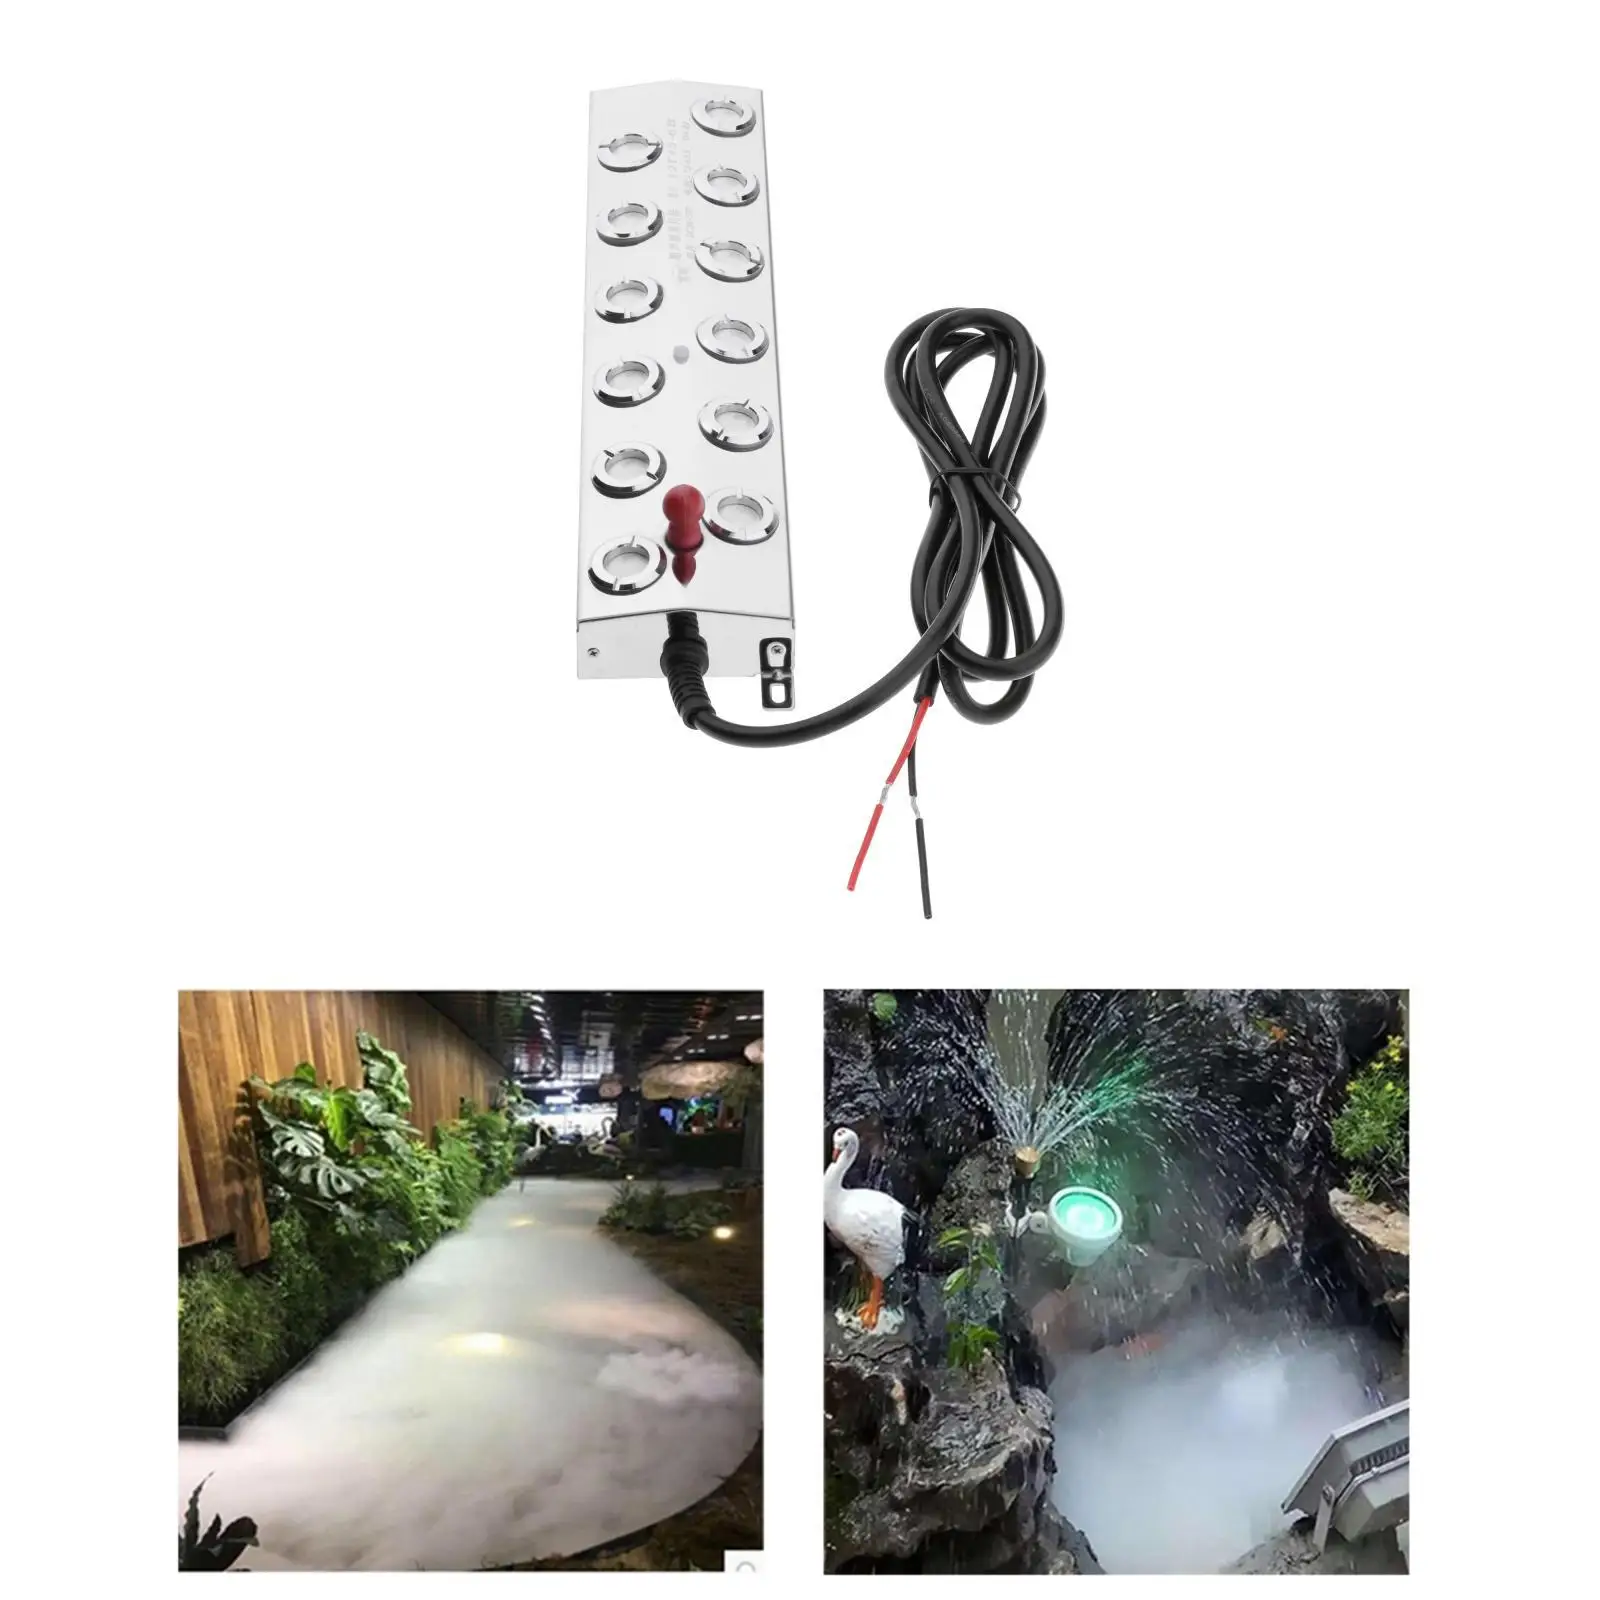 Ultrasonic Mist Fog Maker Swimming Pool Pond Fogger Atomizer Air Humidifier